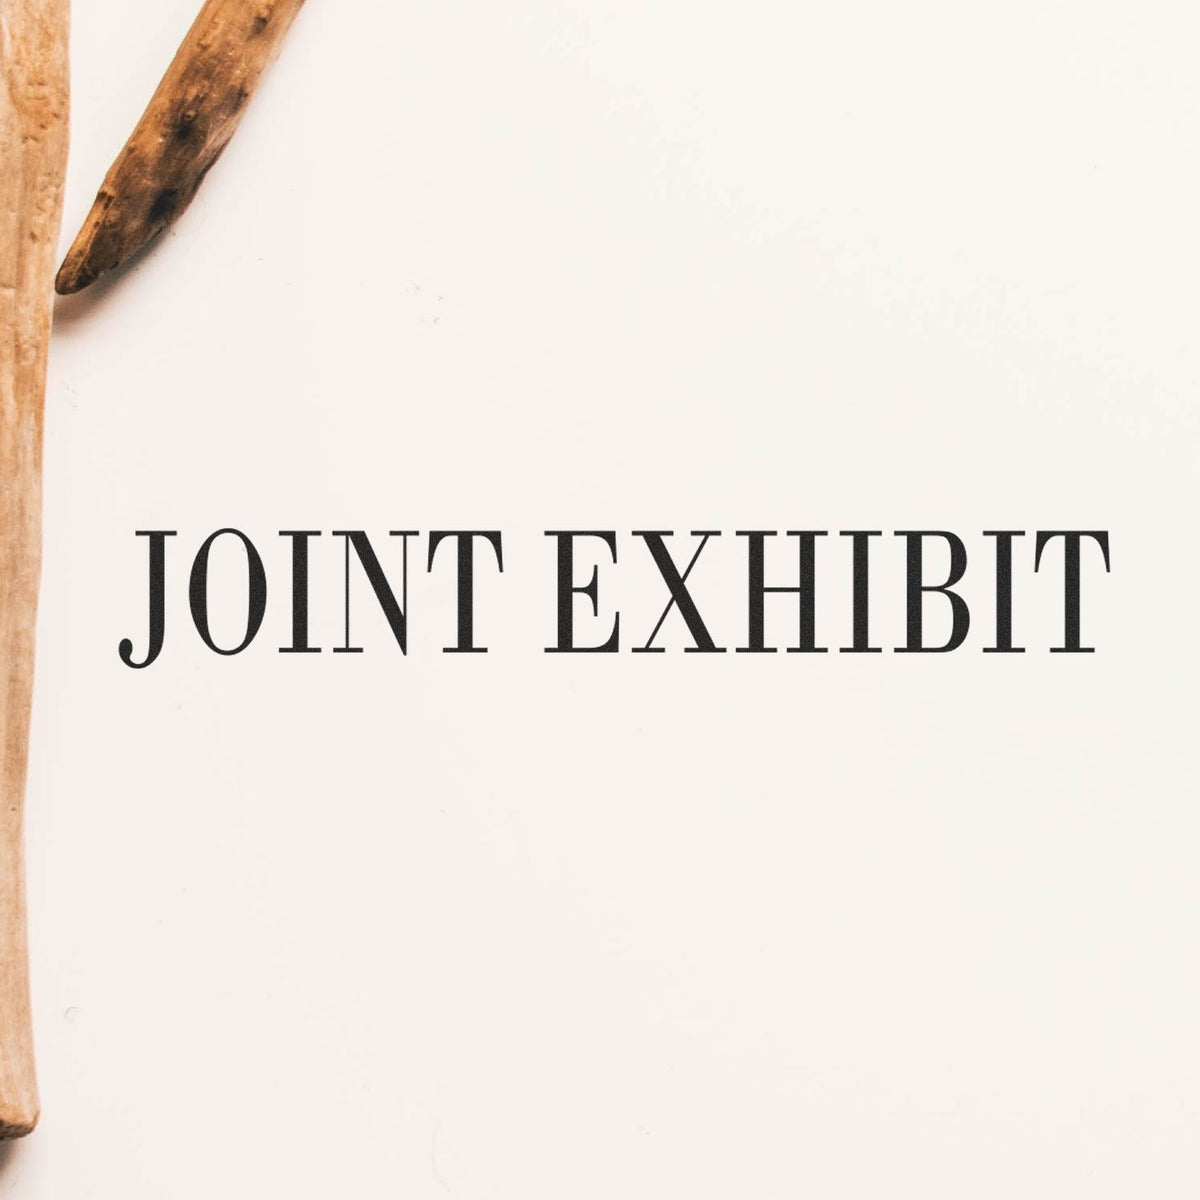 Slim Pre-Inked Joint Exhibit Stamp Lifestyle Photo